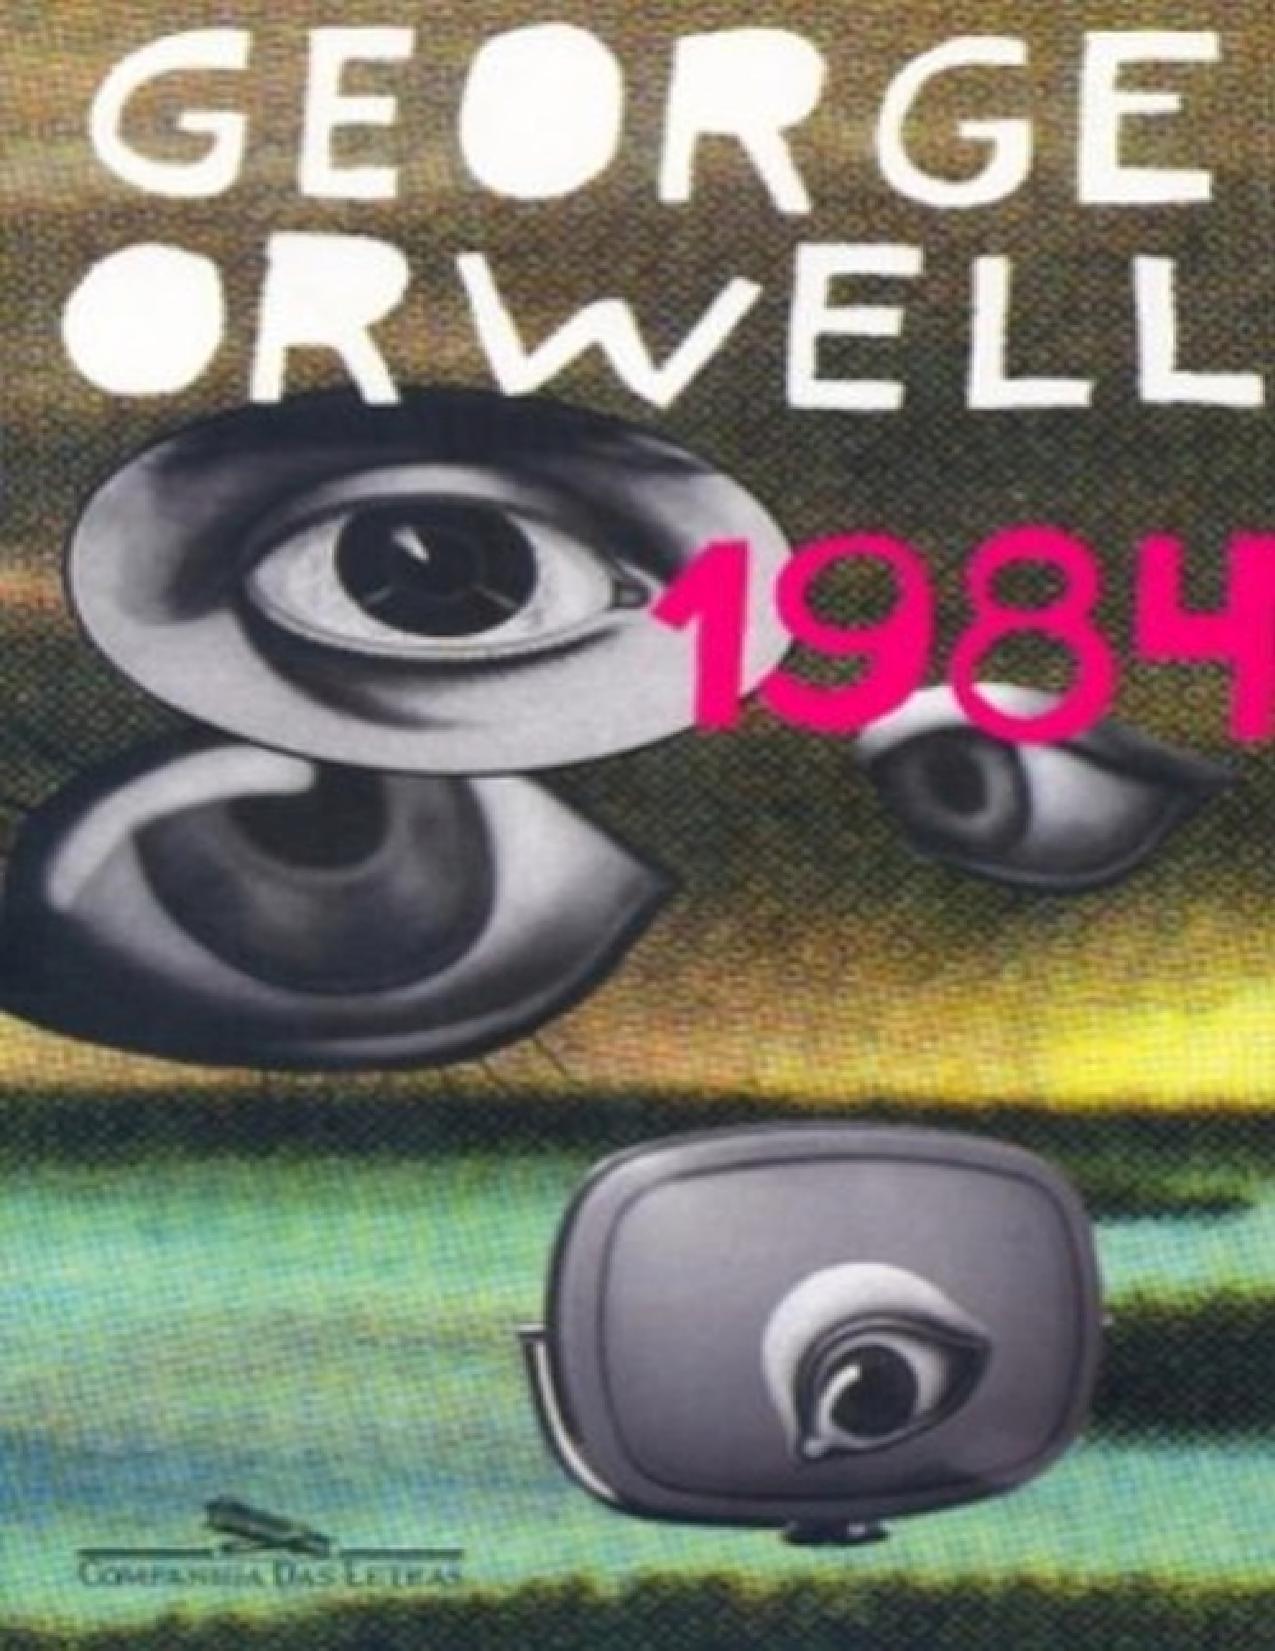 1984 george orwell pdf download portugues ezcap usb cassette capture software download